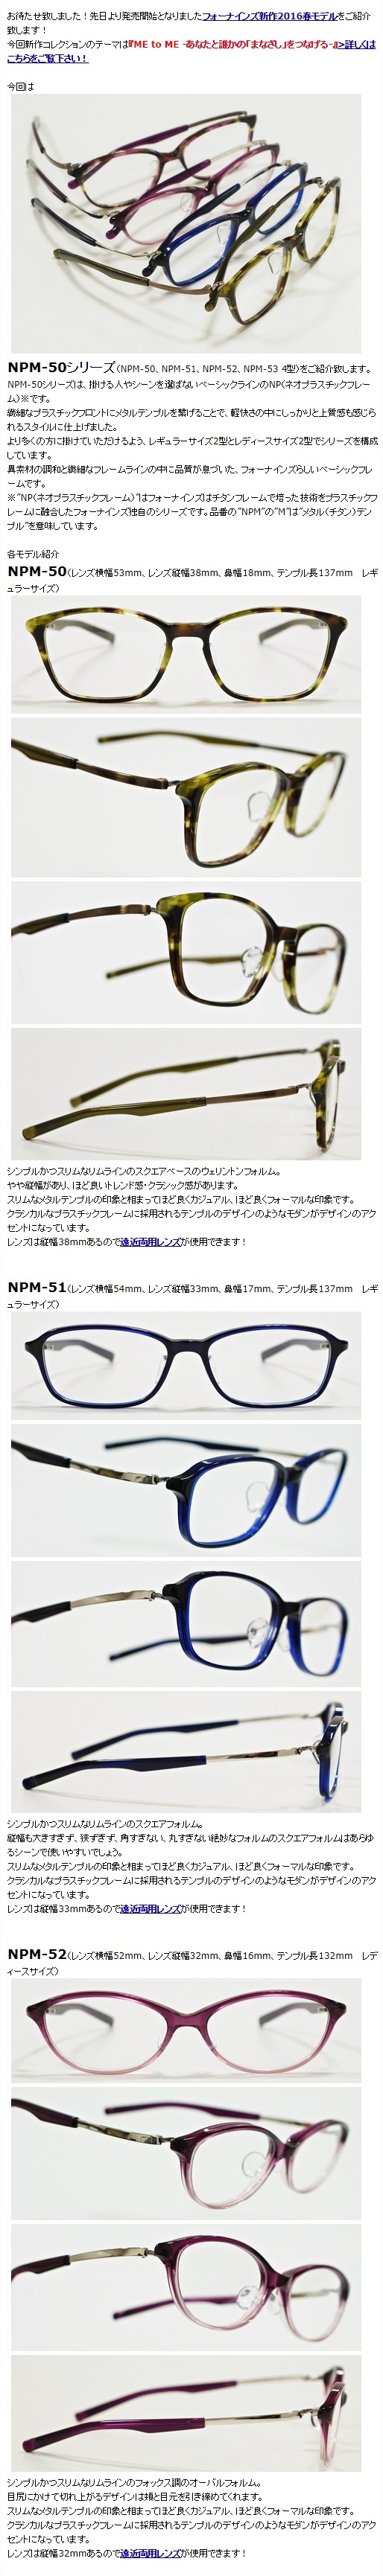 999.9”NPM-50シリーズ”】 | 999.9 selected by HAYASHI-MEGANE BLOG(2)